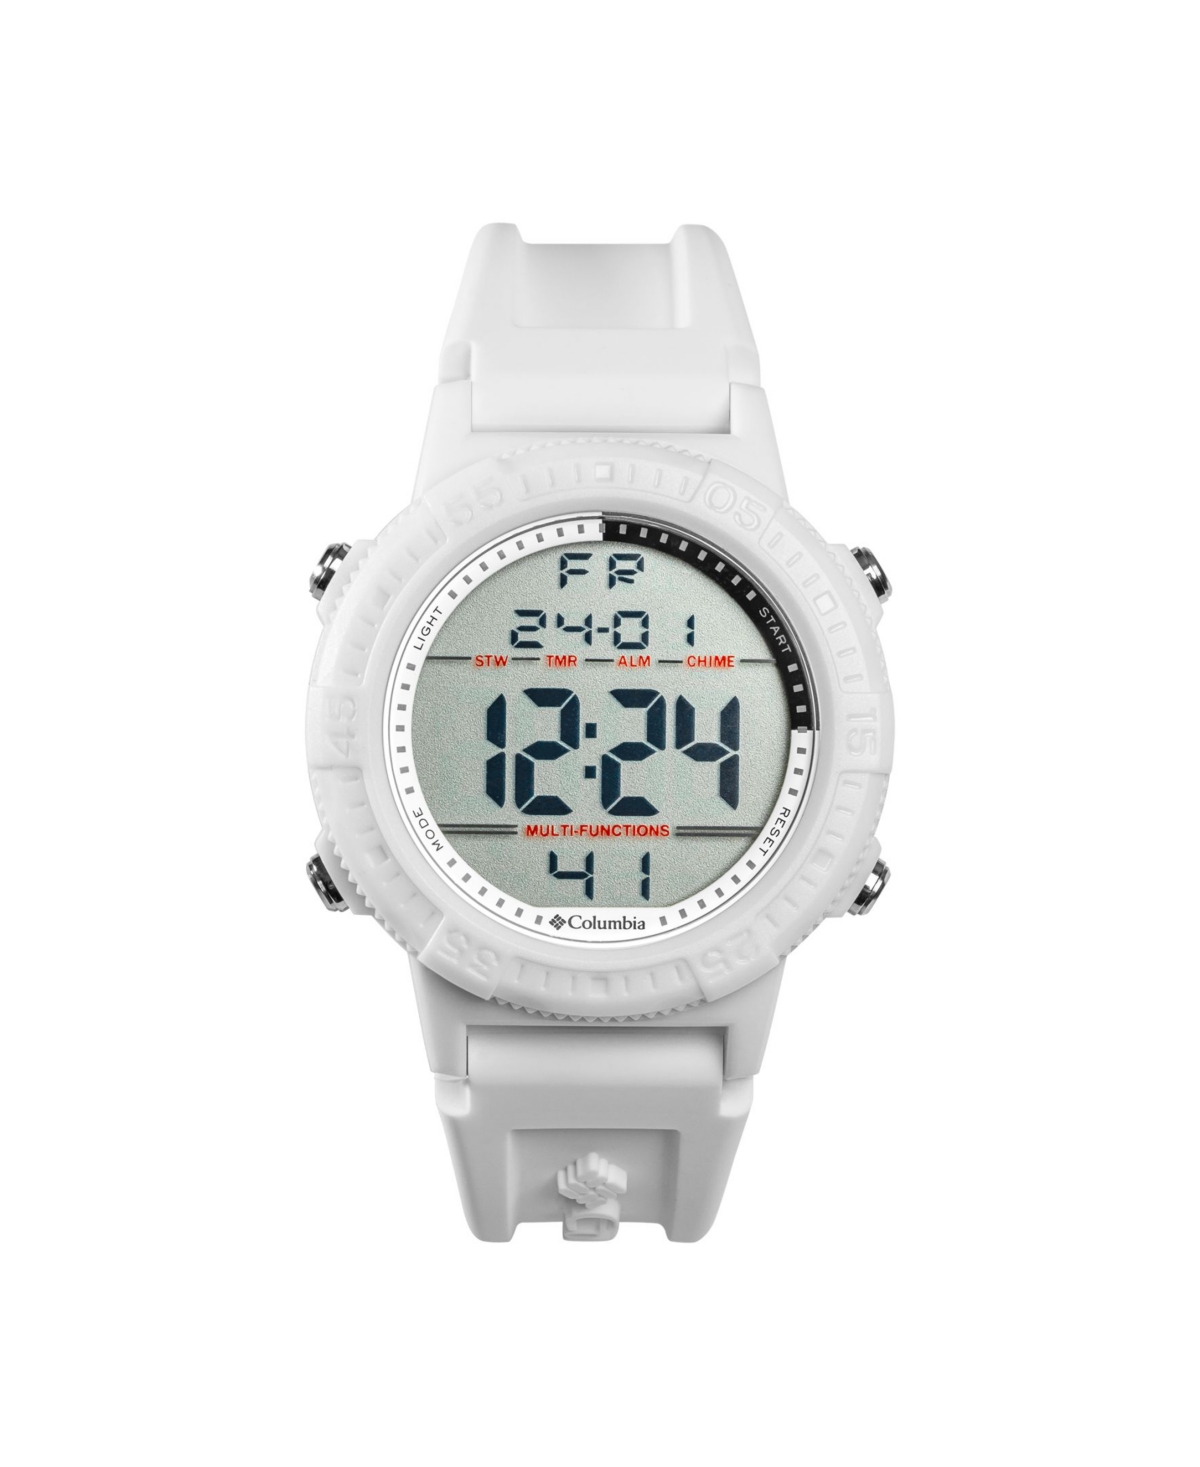 Unisex Peak Patrol White Silicone Strap Digital Watch, 46mm - White